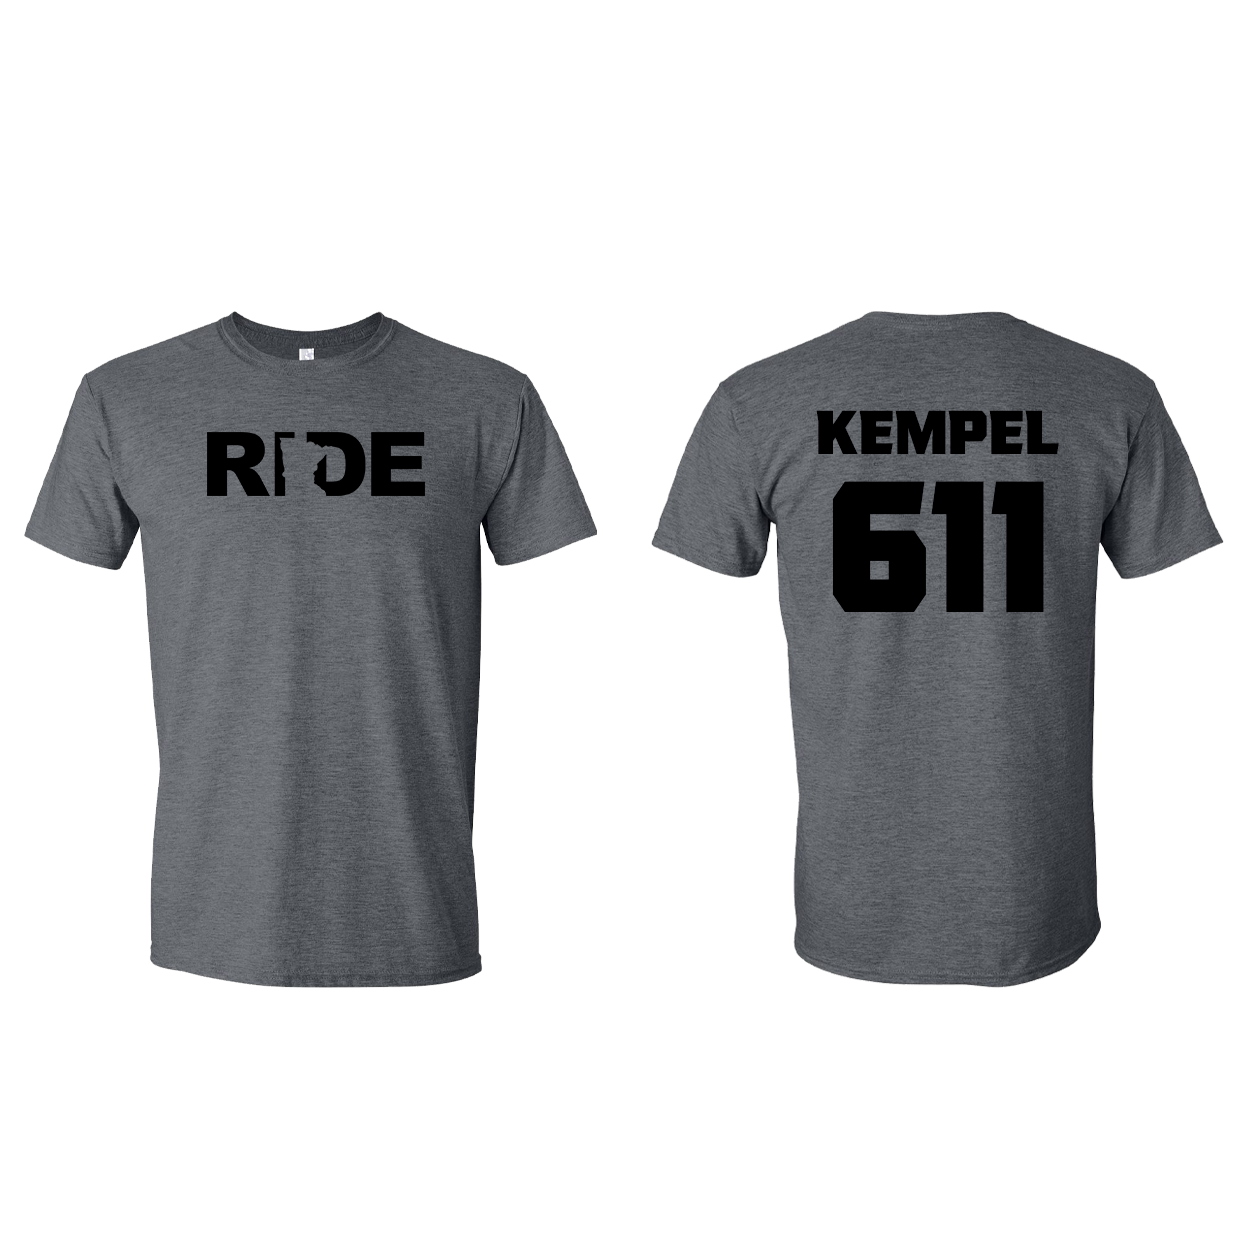 FXR BMX Race Team Classic Athlete Support T-Shirt KEMPEL #611 Dark Heather (Black Logo)